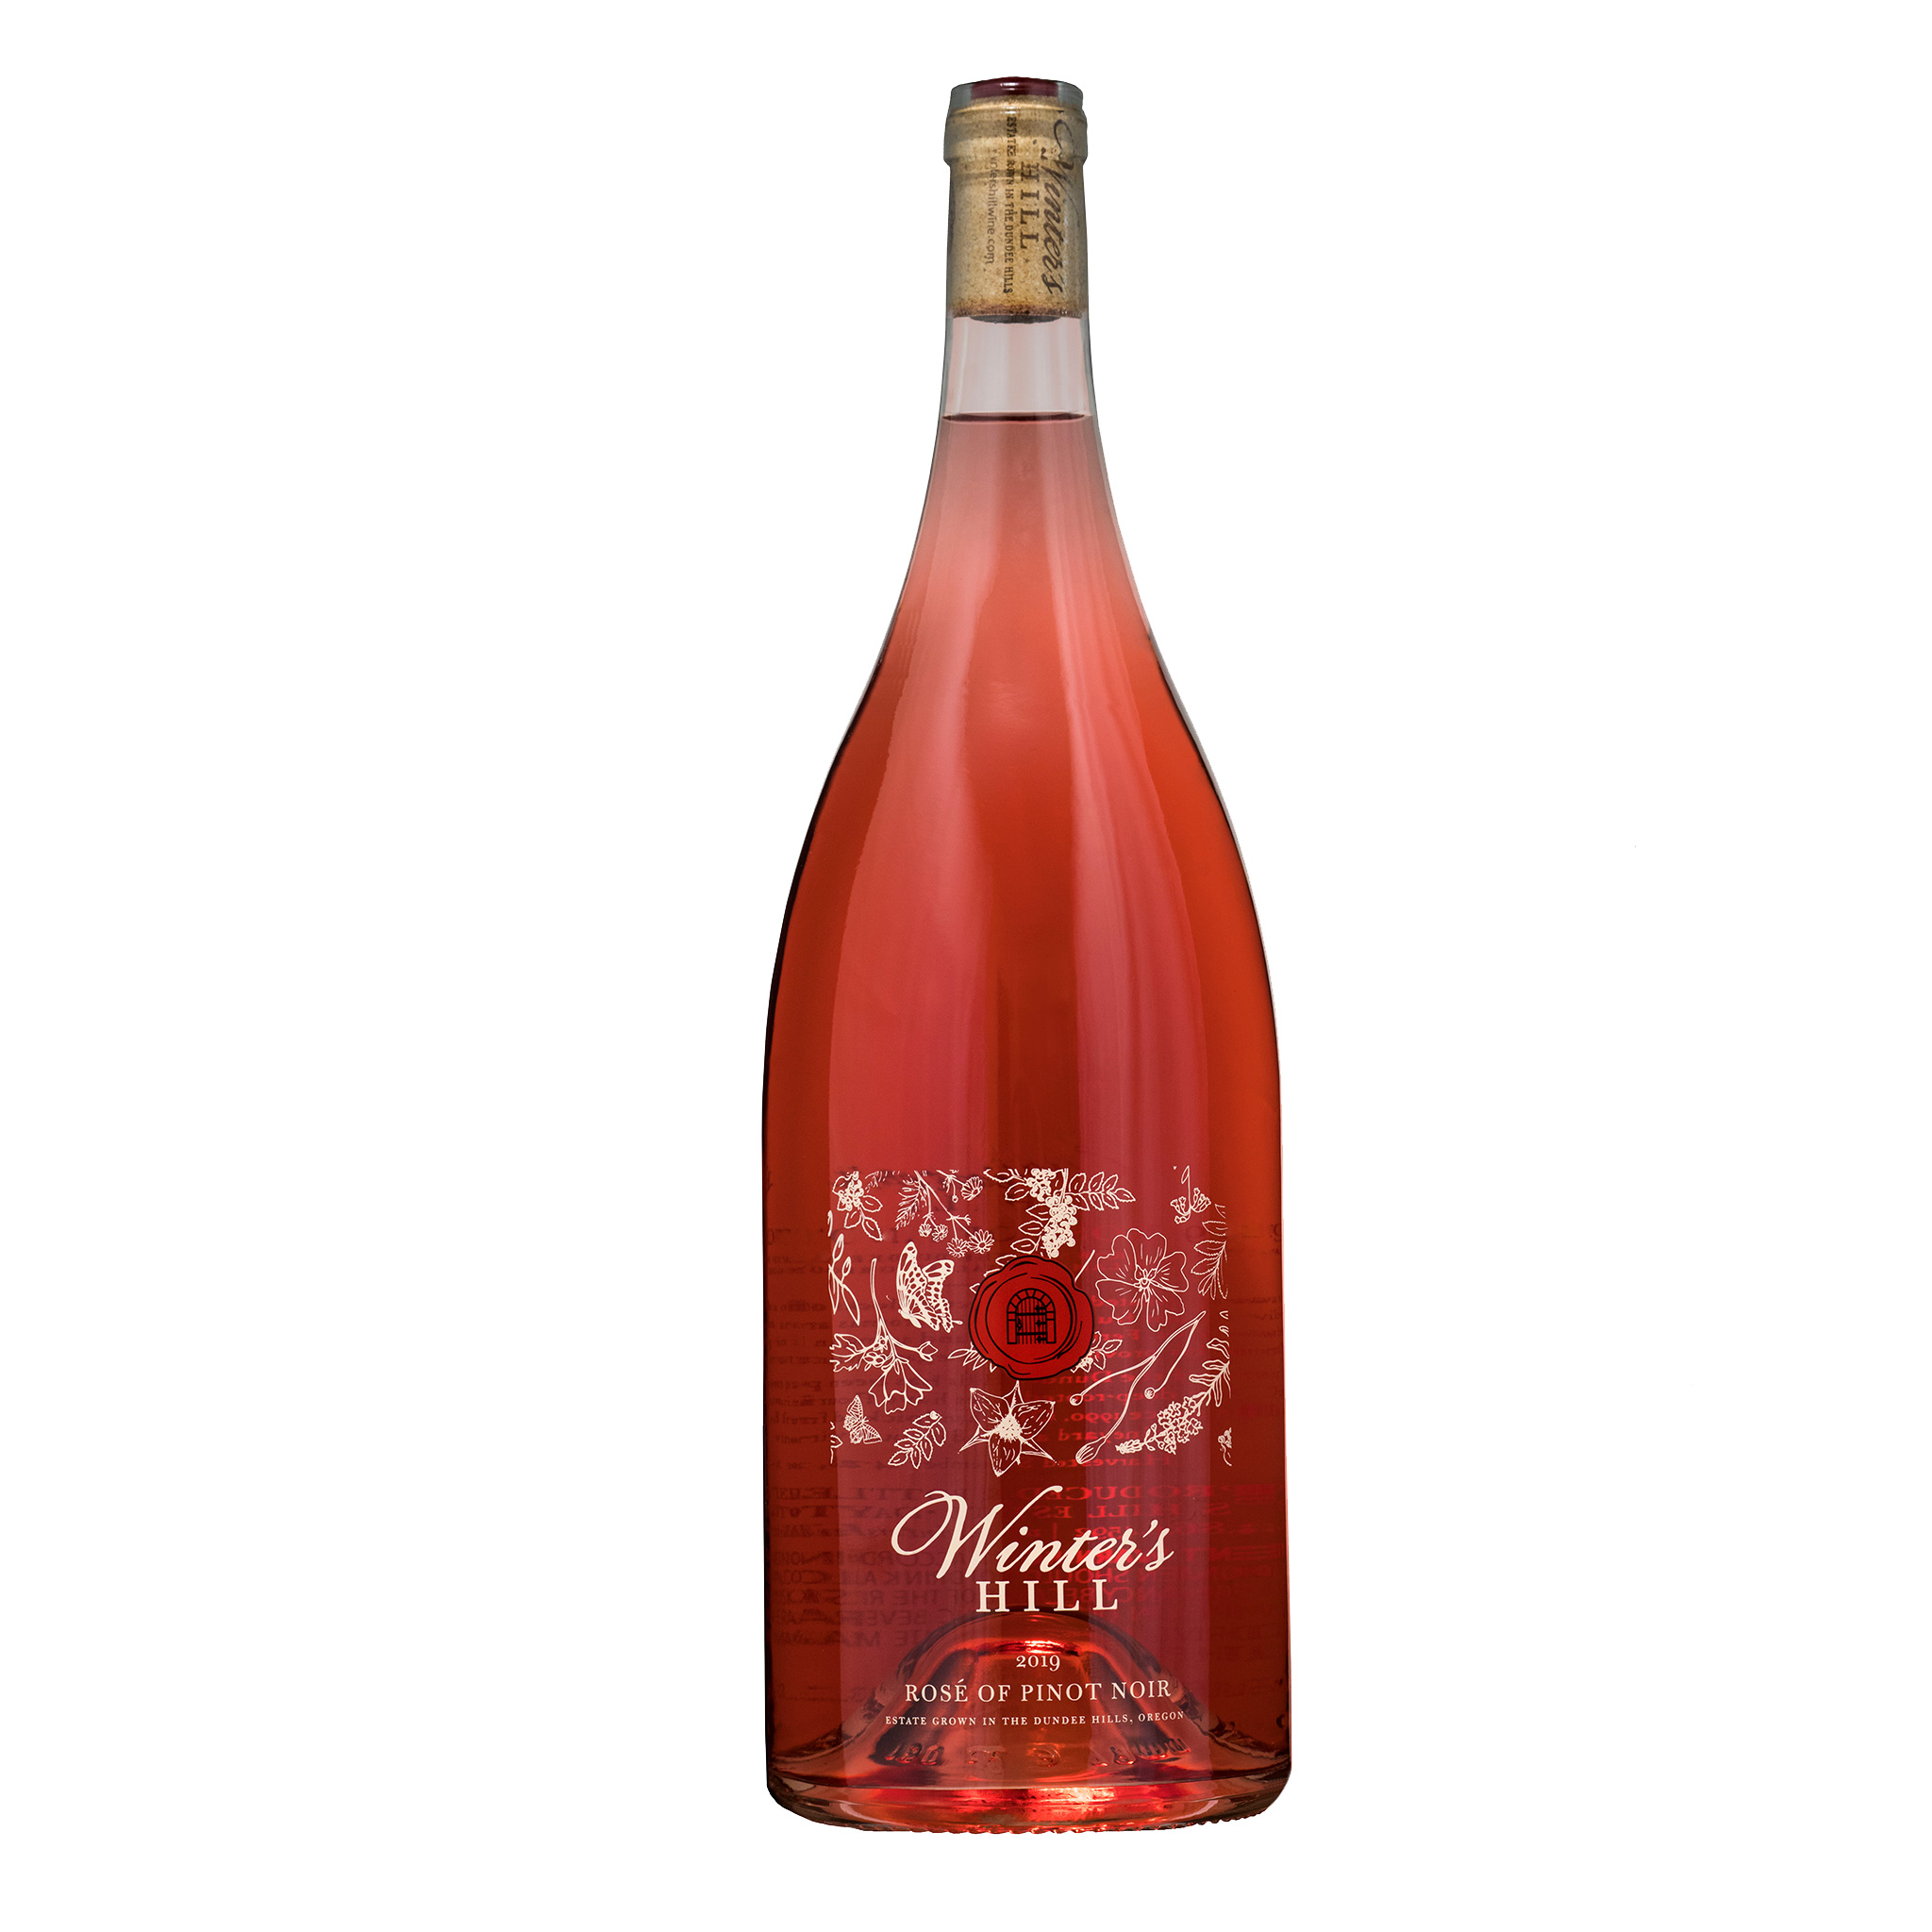 Bottle of rose wine